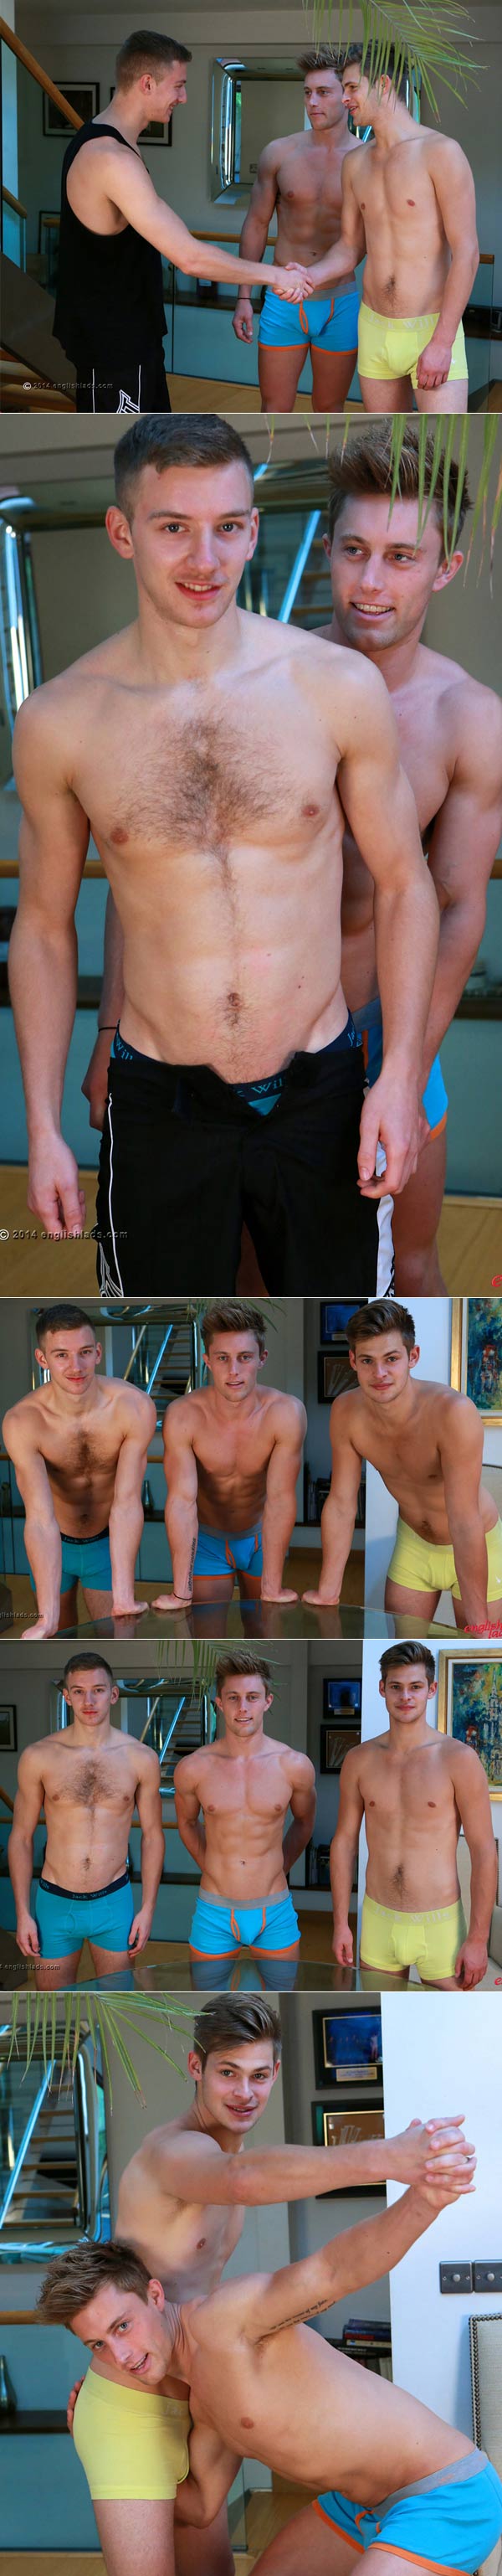 Cameron Donald, Jack Windsor & Andrew Hayden (Super Hot Threesome) at EnglishLads